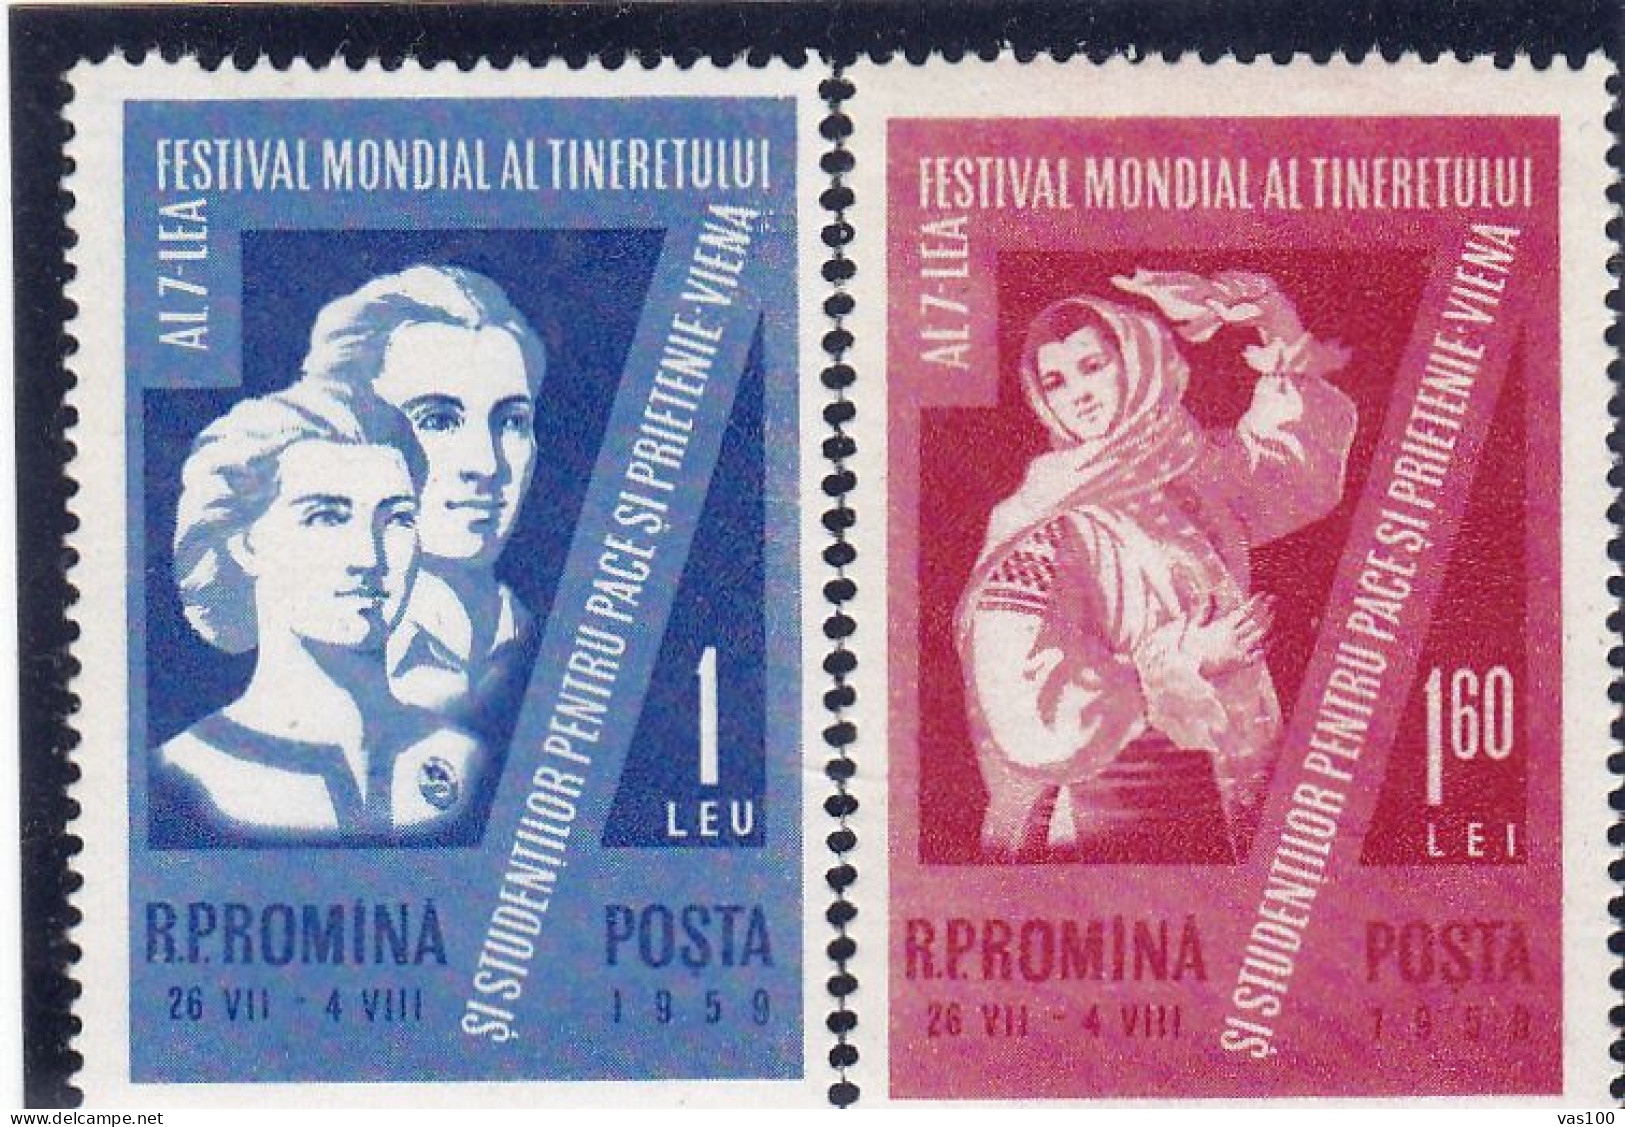 YOUTH,7TH YOUTH FESTIVAL-WIEN,1959,MI.1790/91, MNH**, ROMANIA. - Ungebraucht